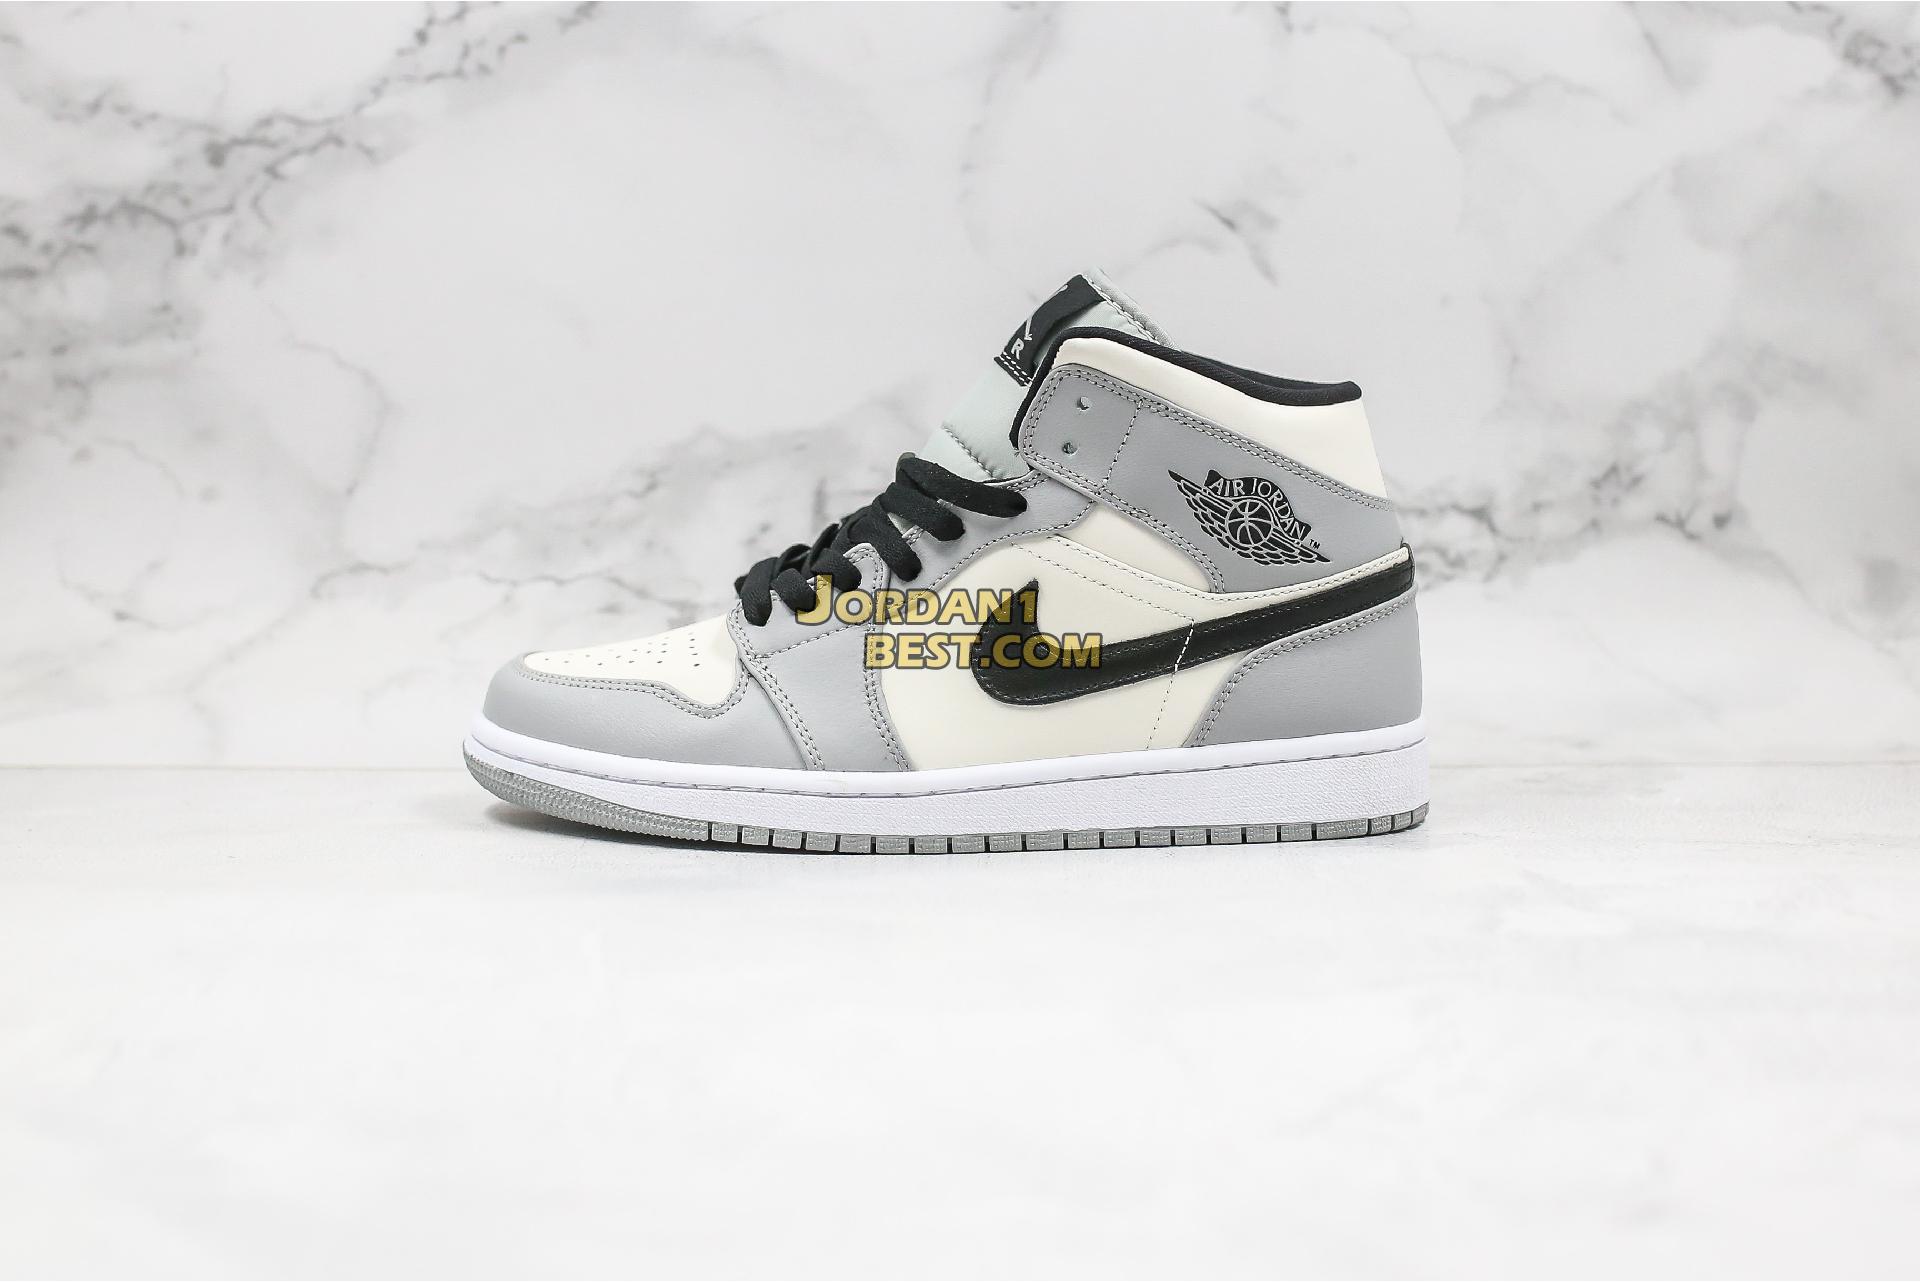 best replicas 2020 Air Jordan 1 Mid SE "Smoke Grey" 554724-092 Mens Womens light smoke grey/black-white Shoes replicas On Wholesale Sale Online